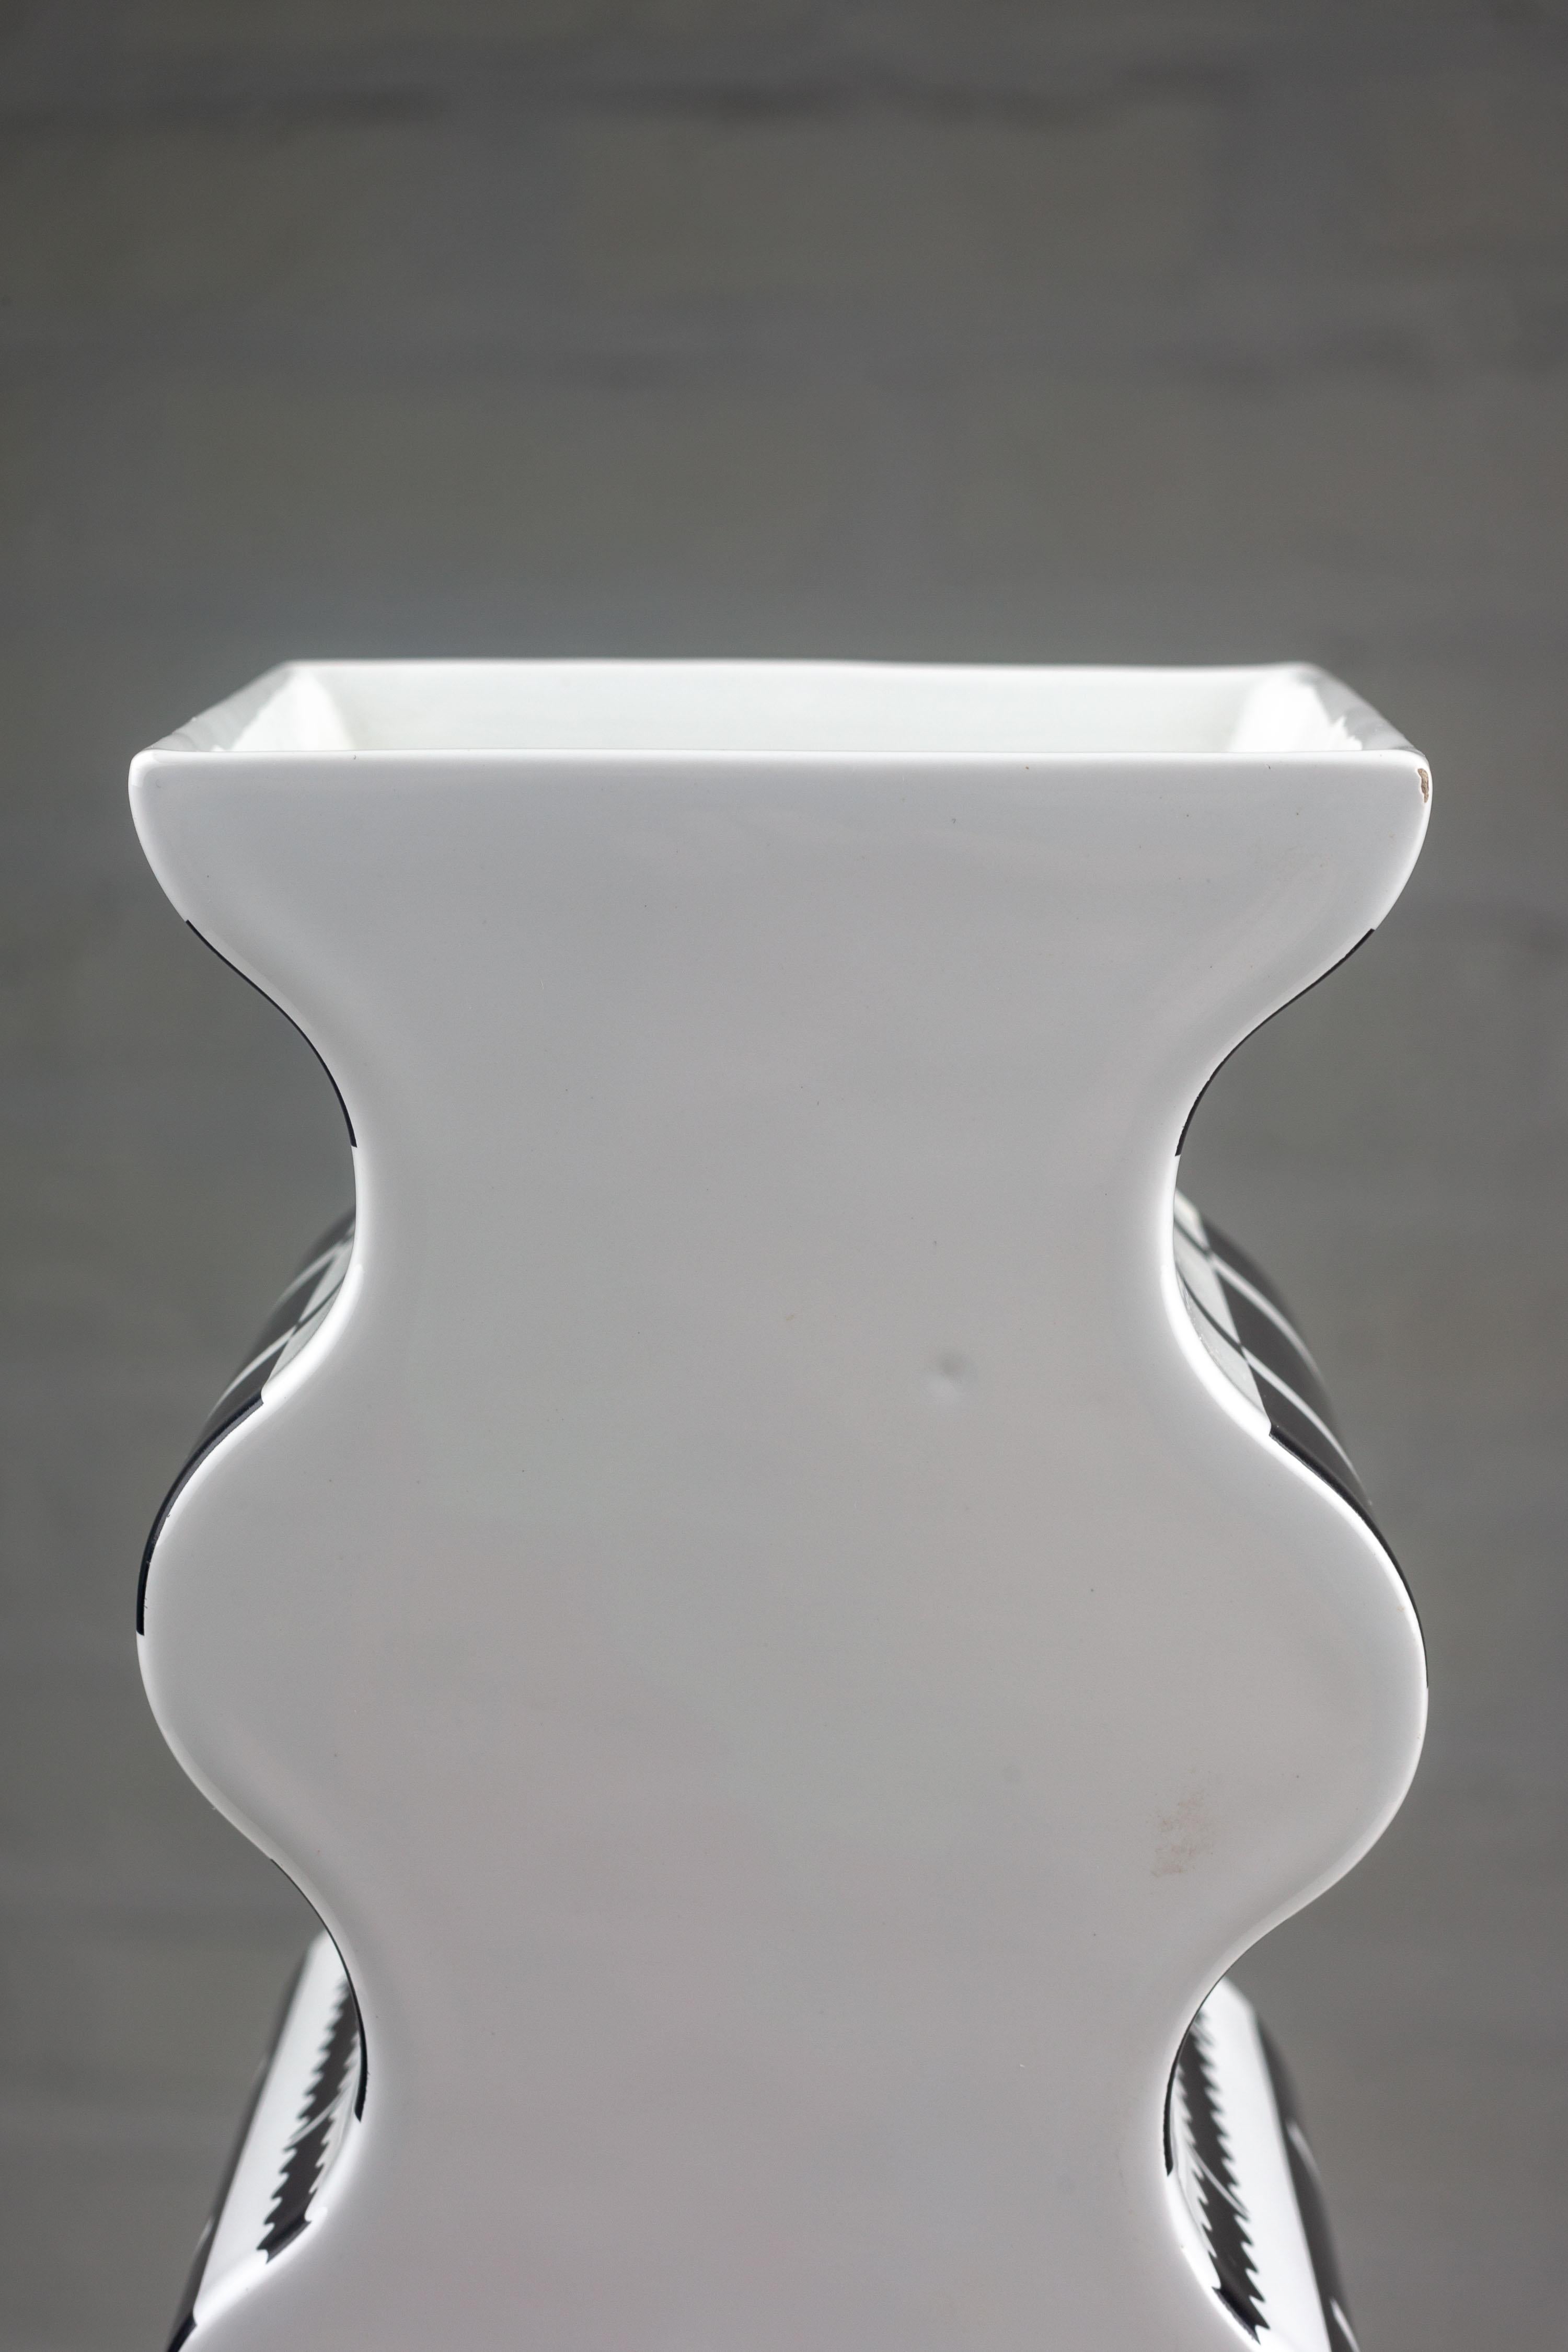 Ceramic Alessandro Mendini Vase for Studio Alchimia, 1988 For Sale